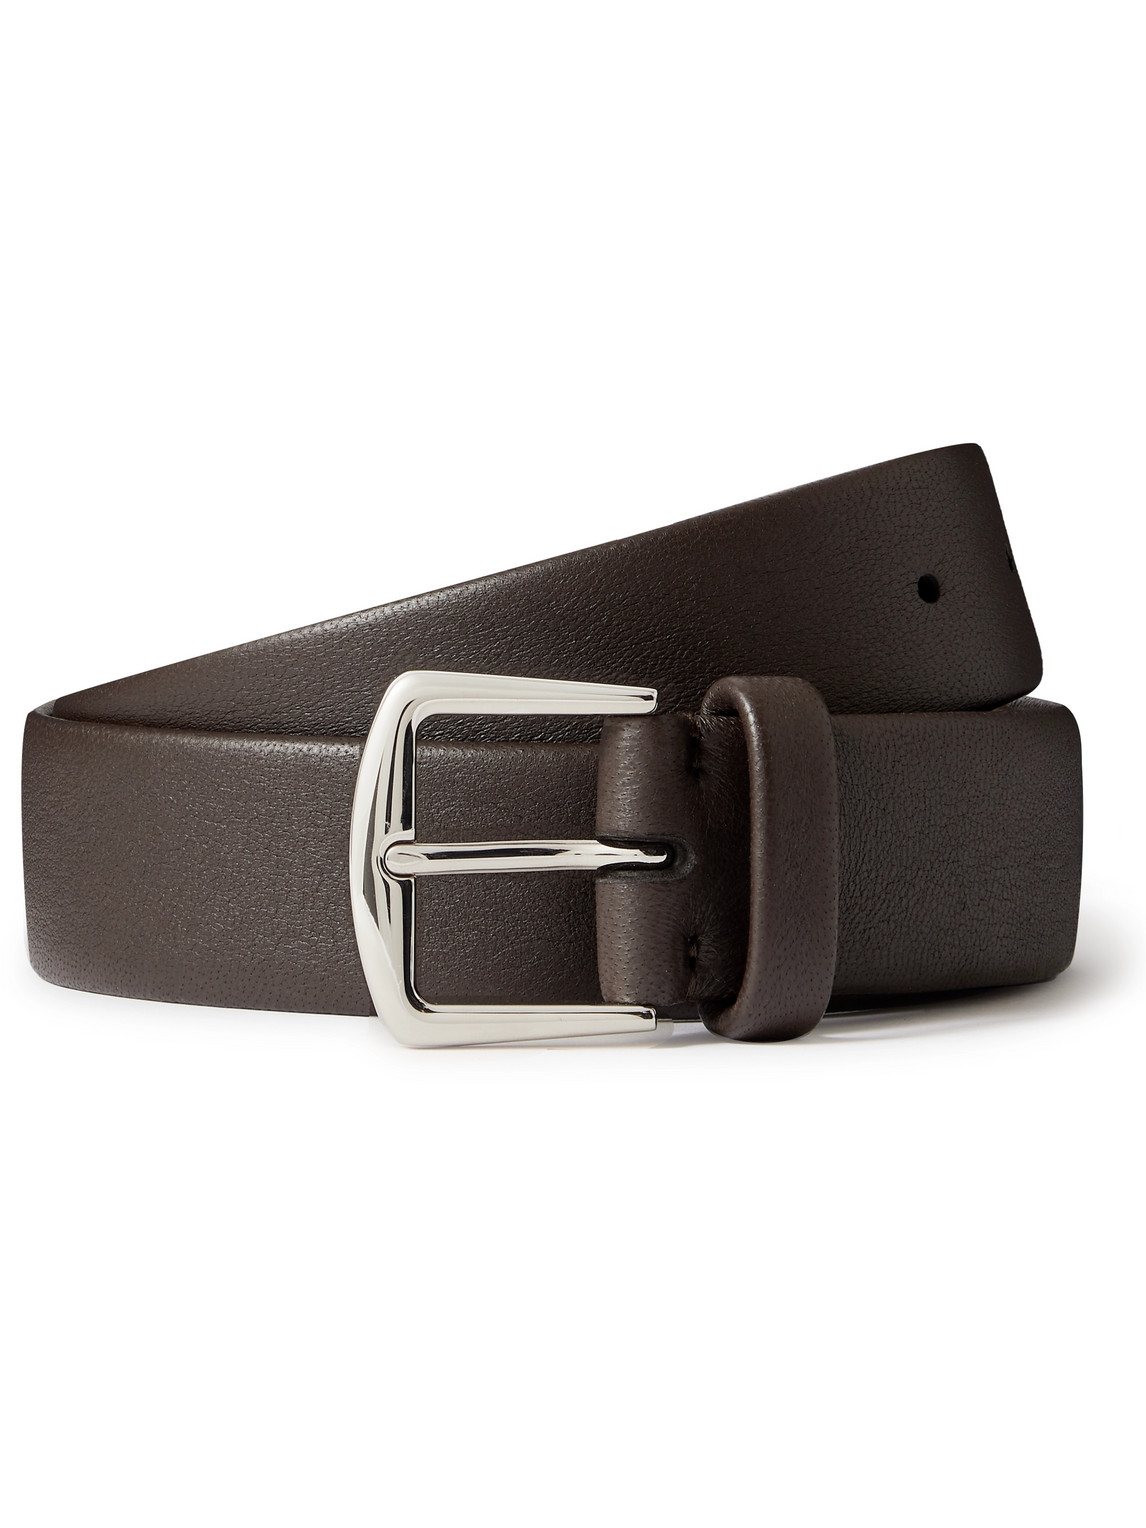 3.5cm Leather Belt